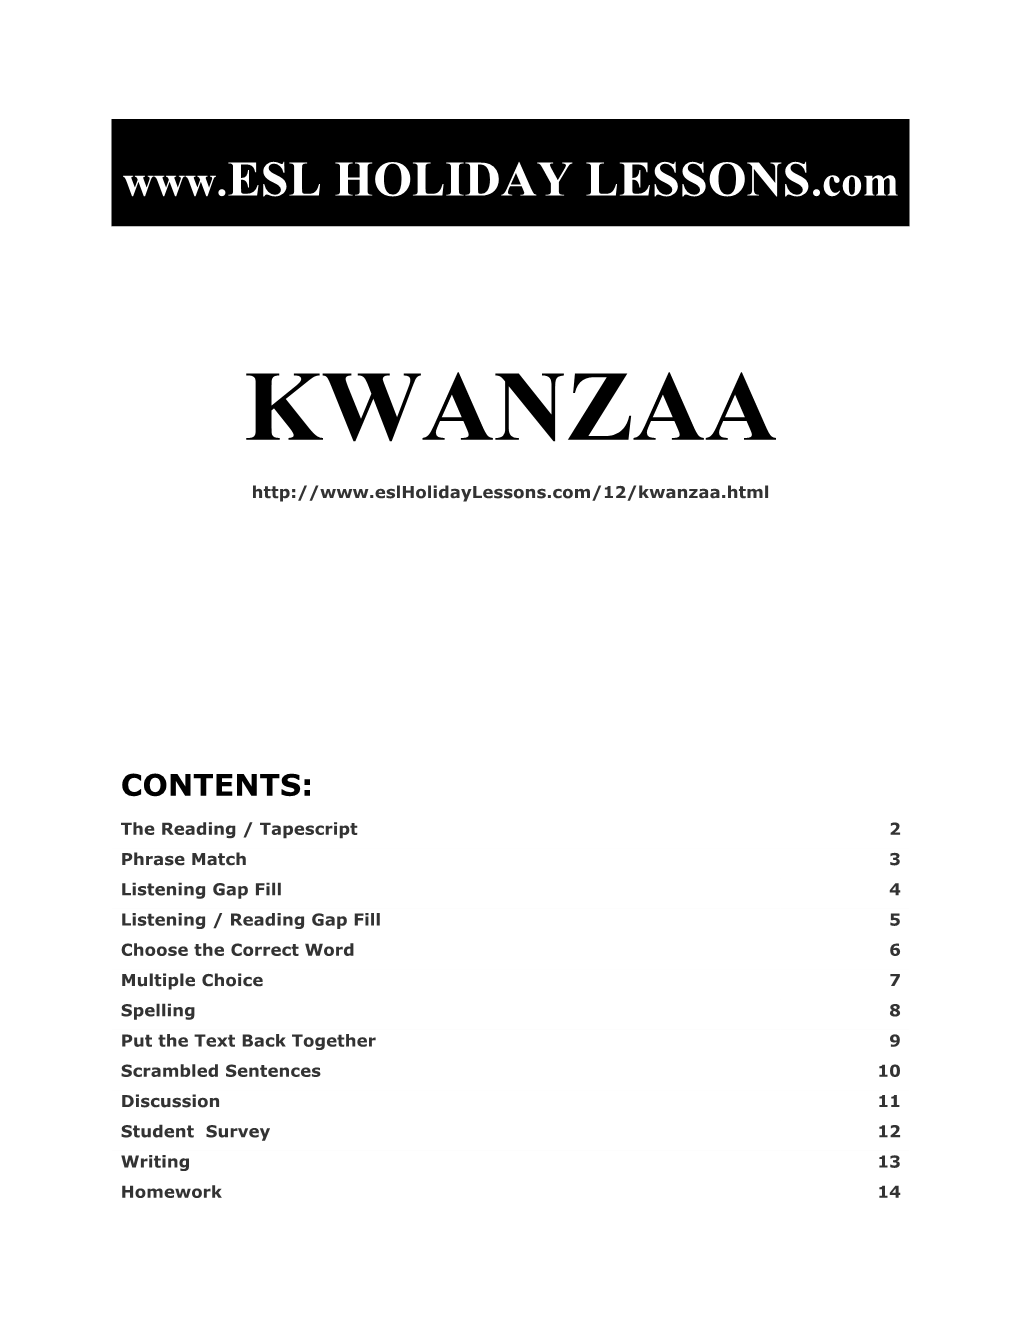 Holiday Lessons - Kwanzaa